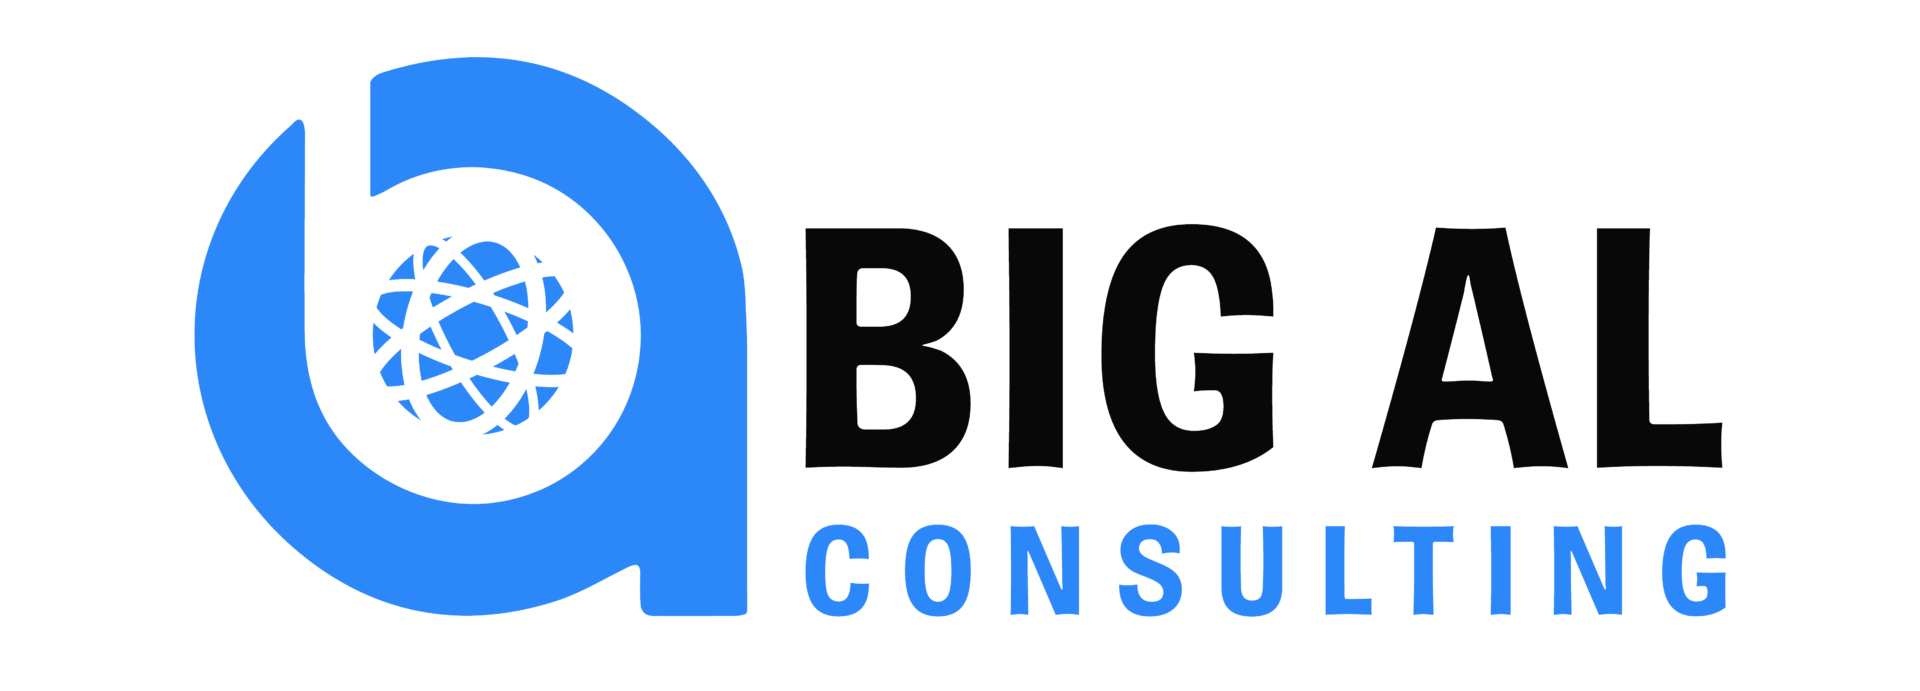 big al consulting logo